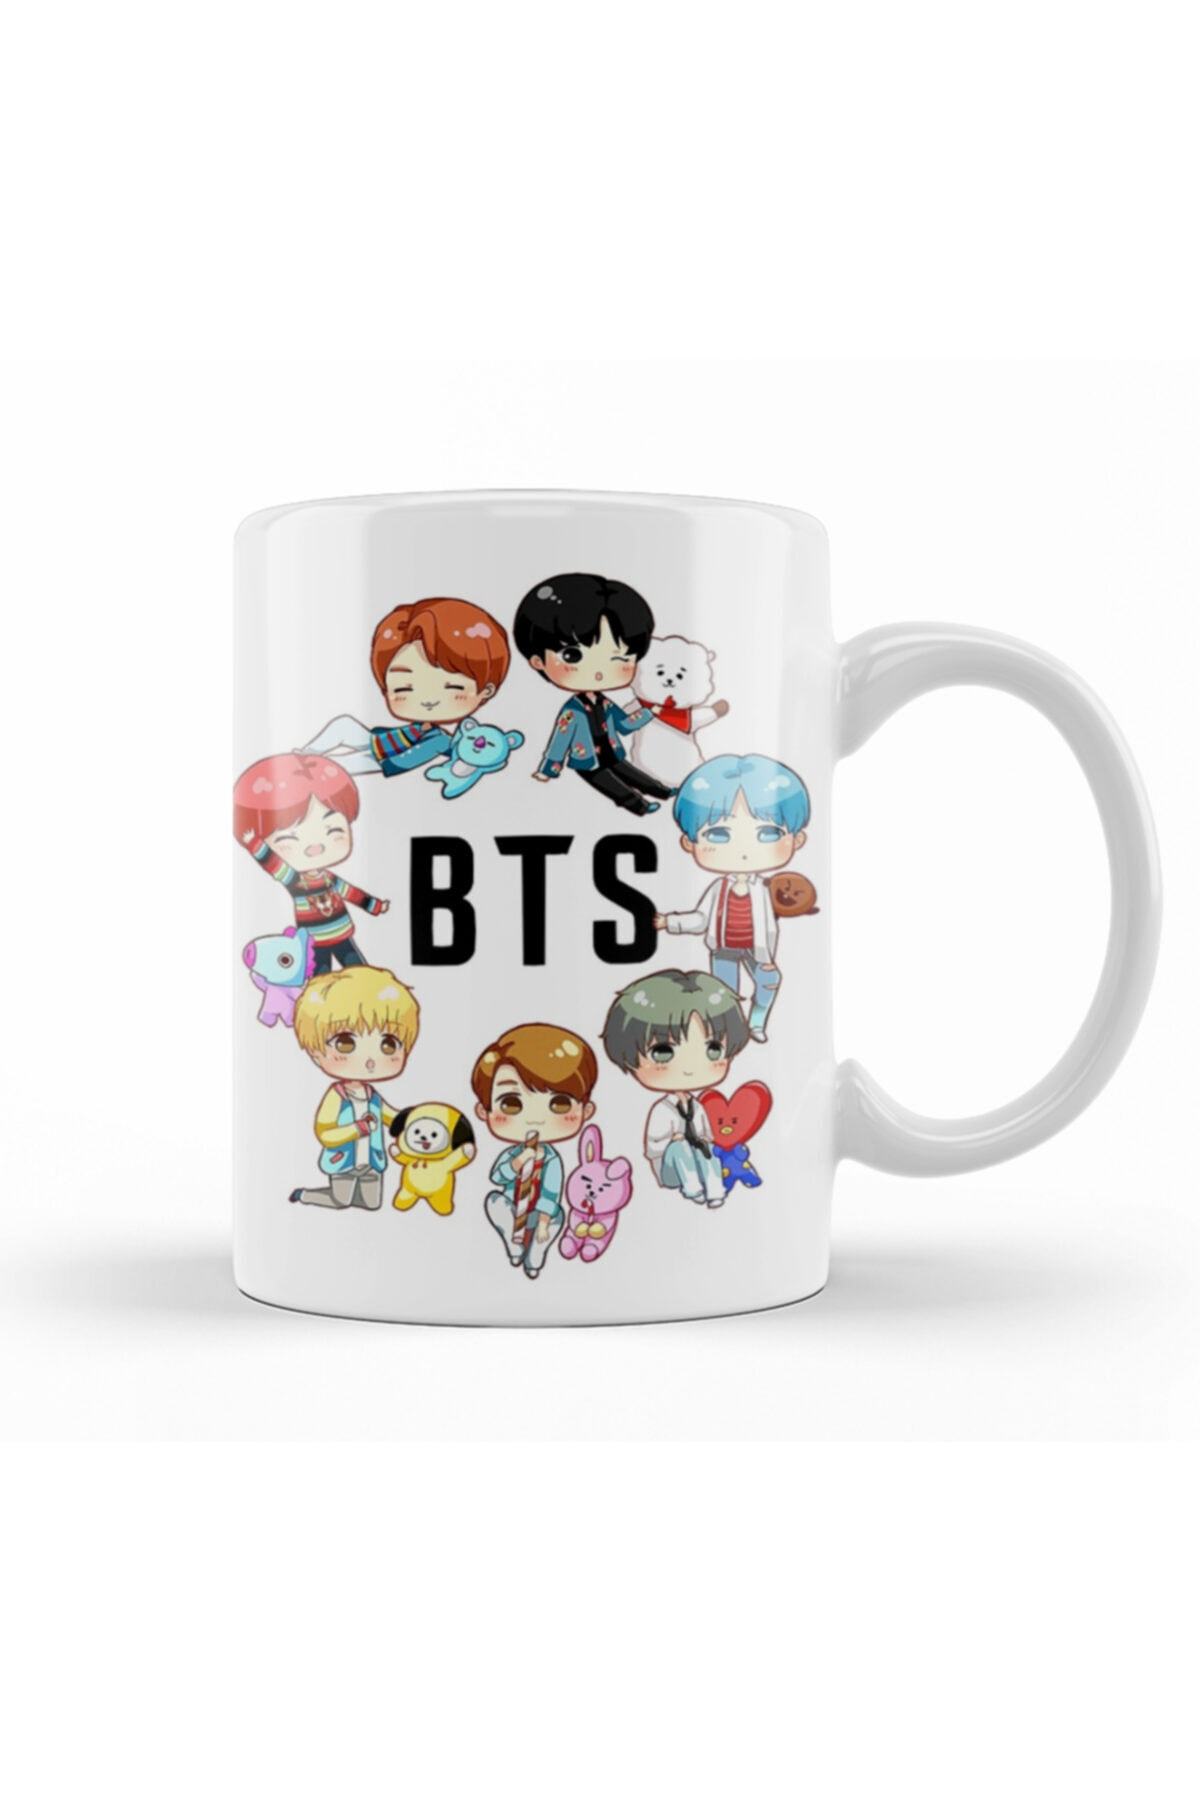 BTS Cup Ceramic BTS Group Printed Cup K-Pop Mug KPS2007 Model 2 Official Korean Pop Merch